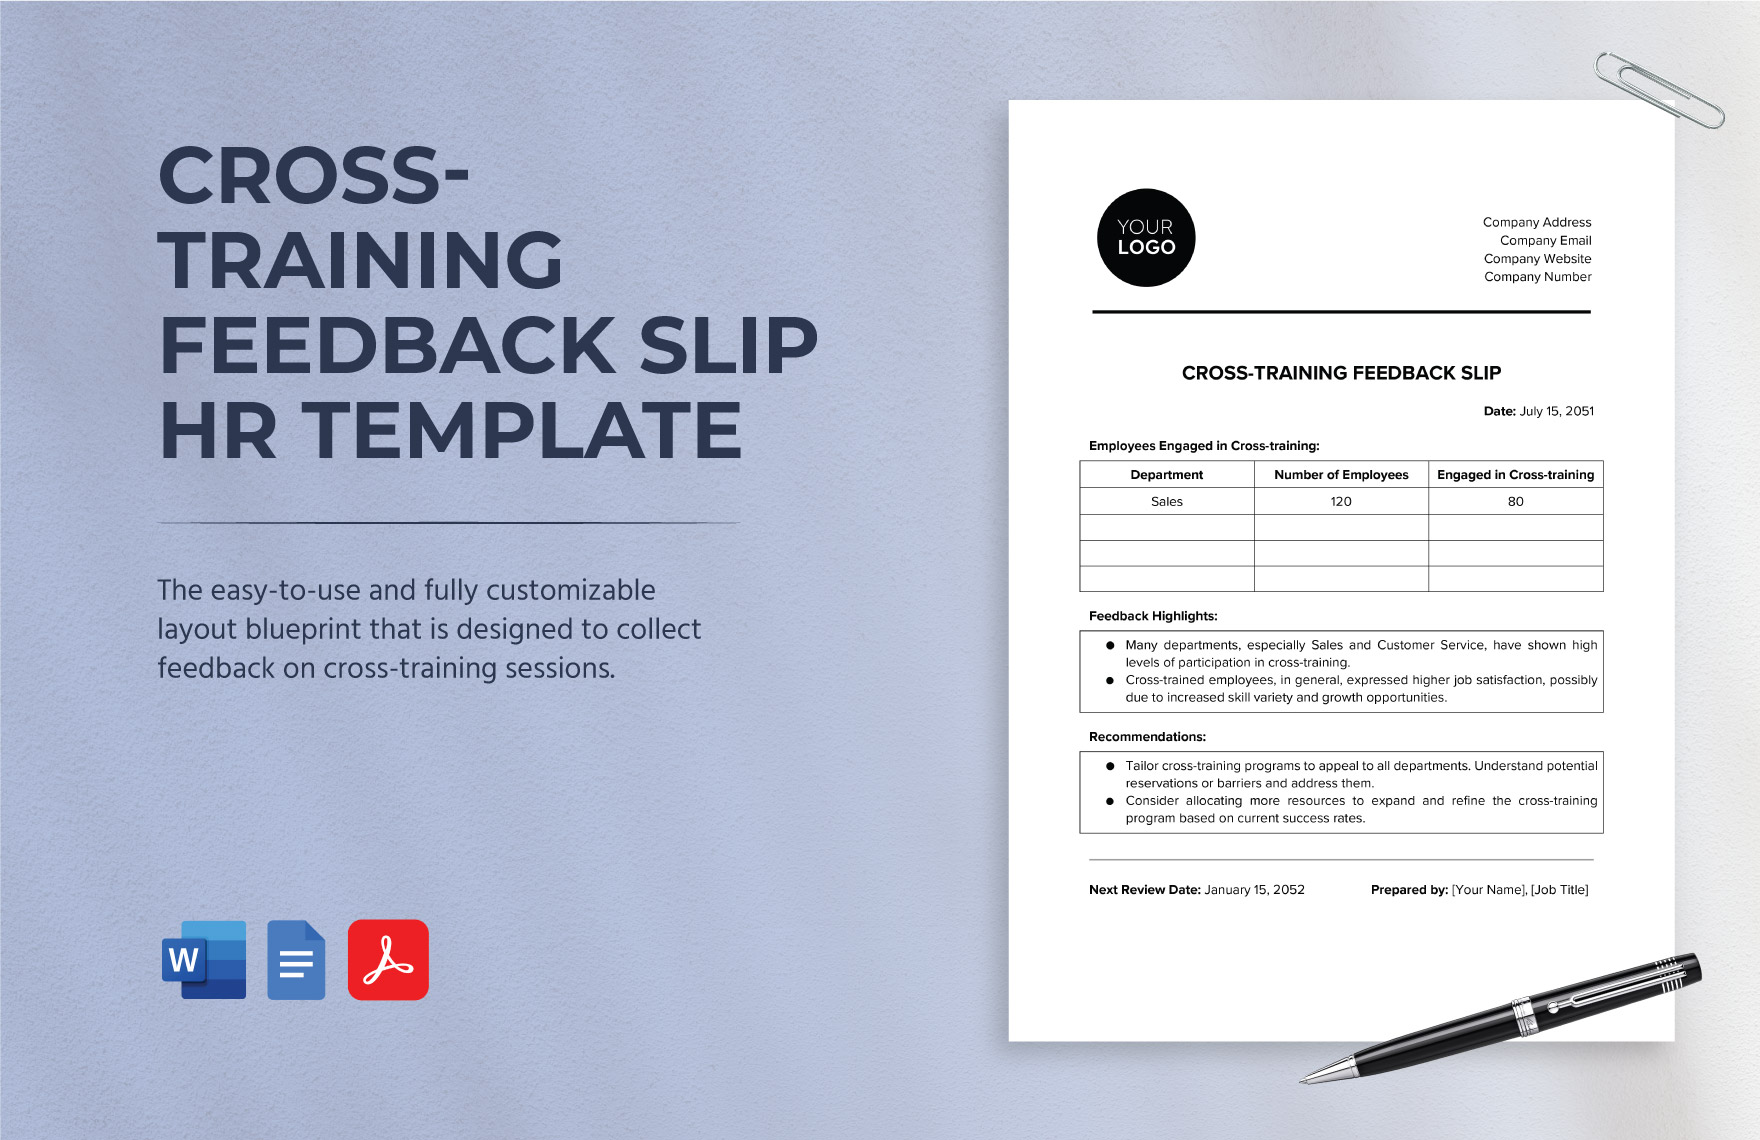 Cross-training Feedback Slip HR Template